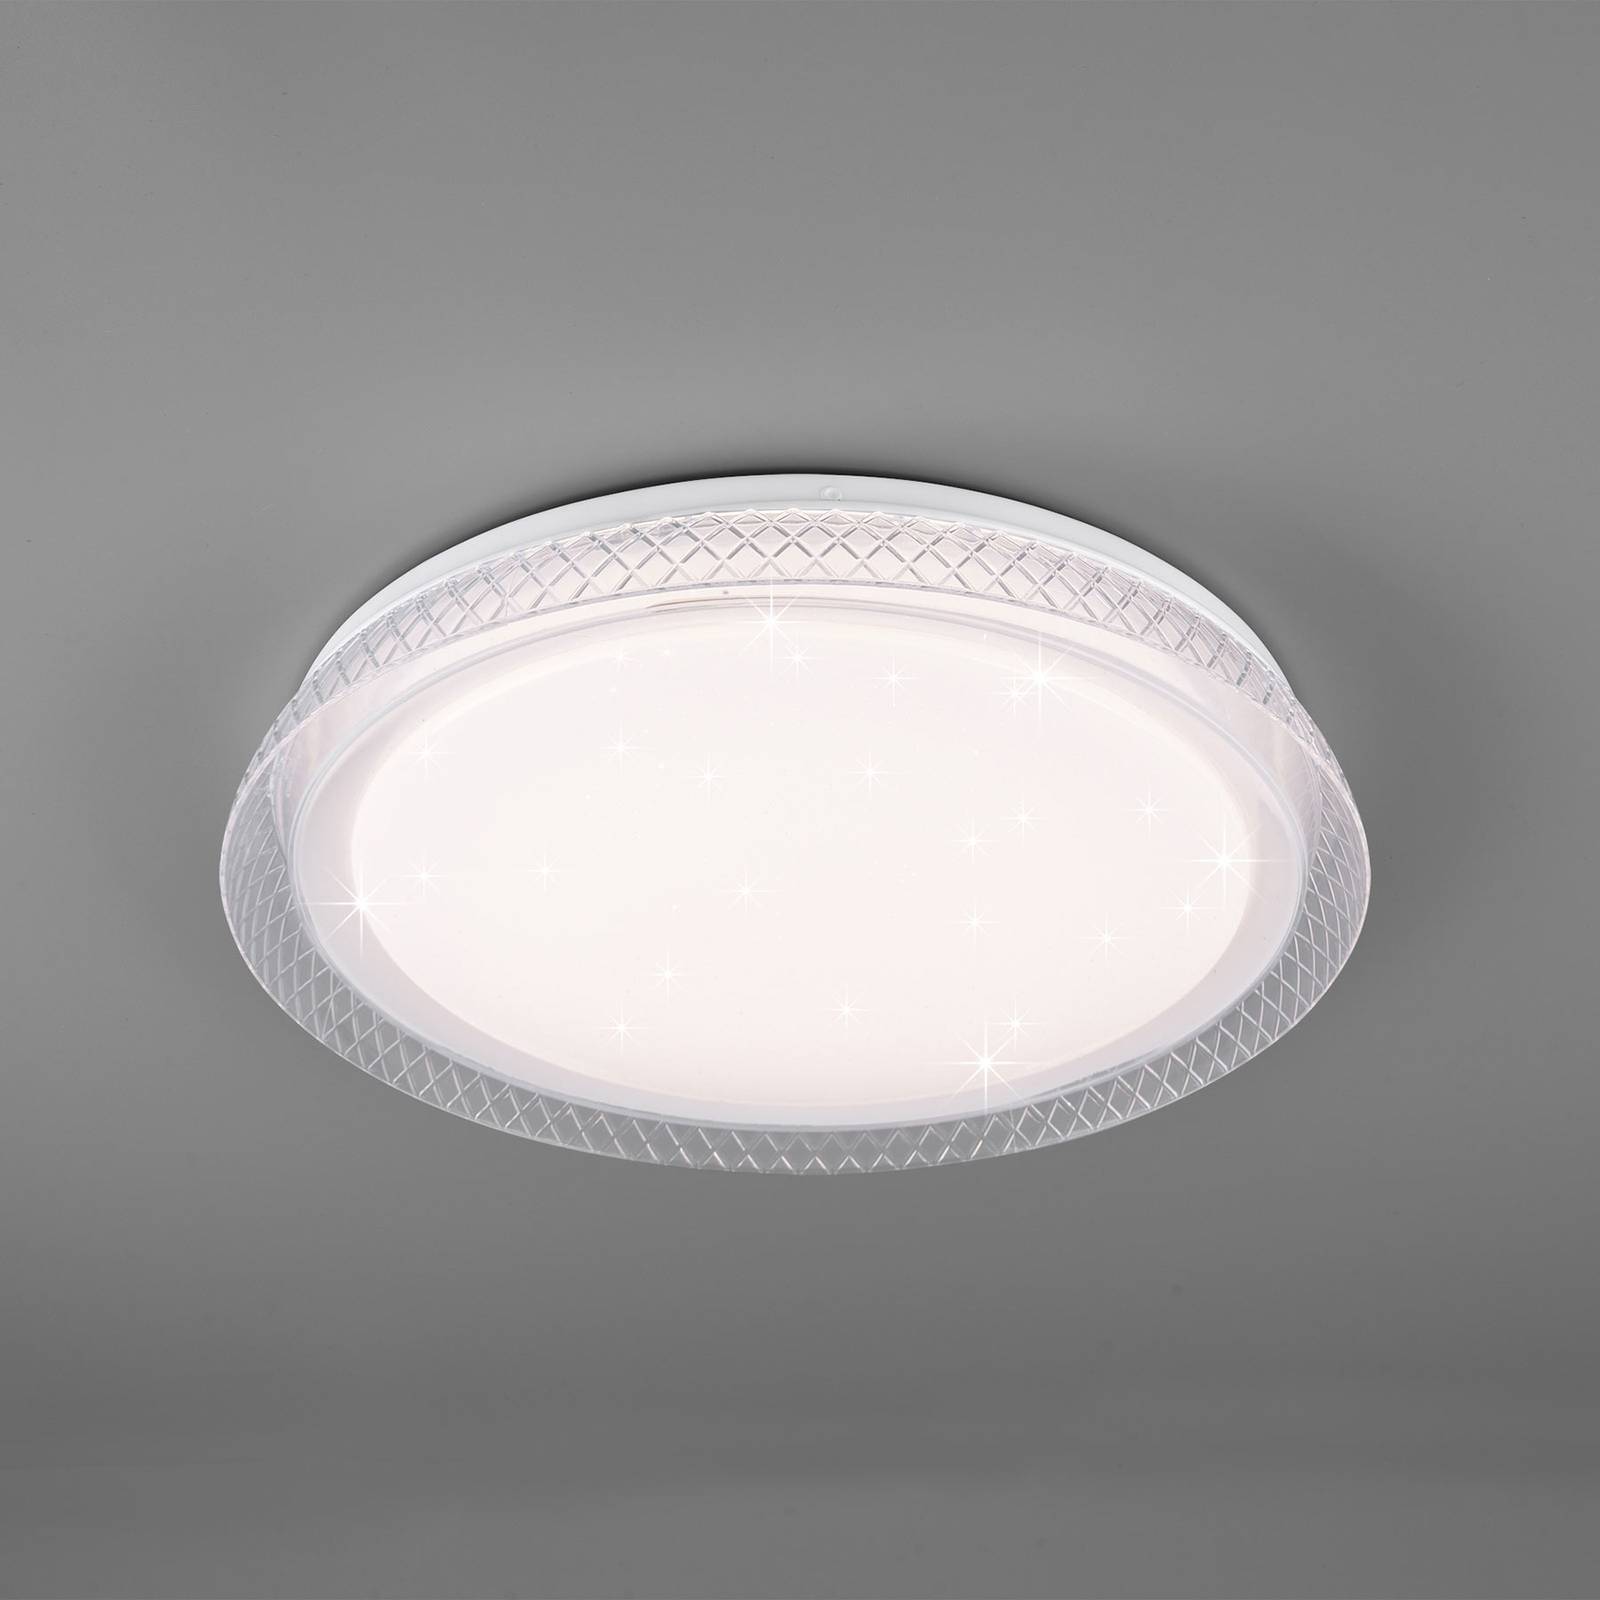 LED plafondlamp Heracles, tunable white, Ø 38 cm